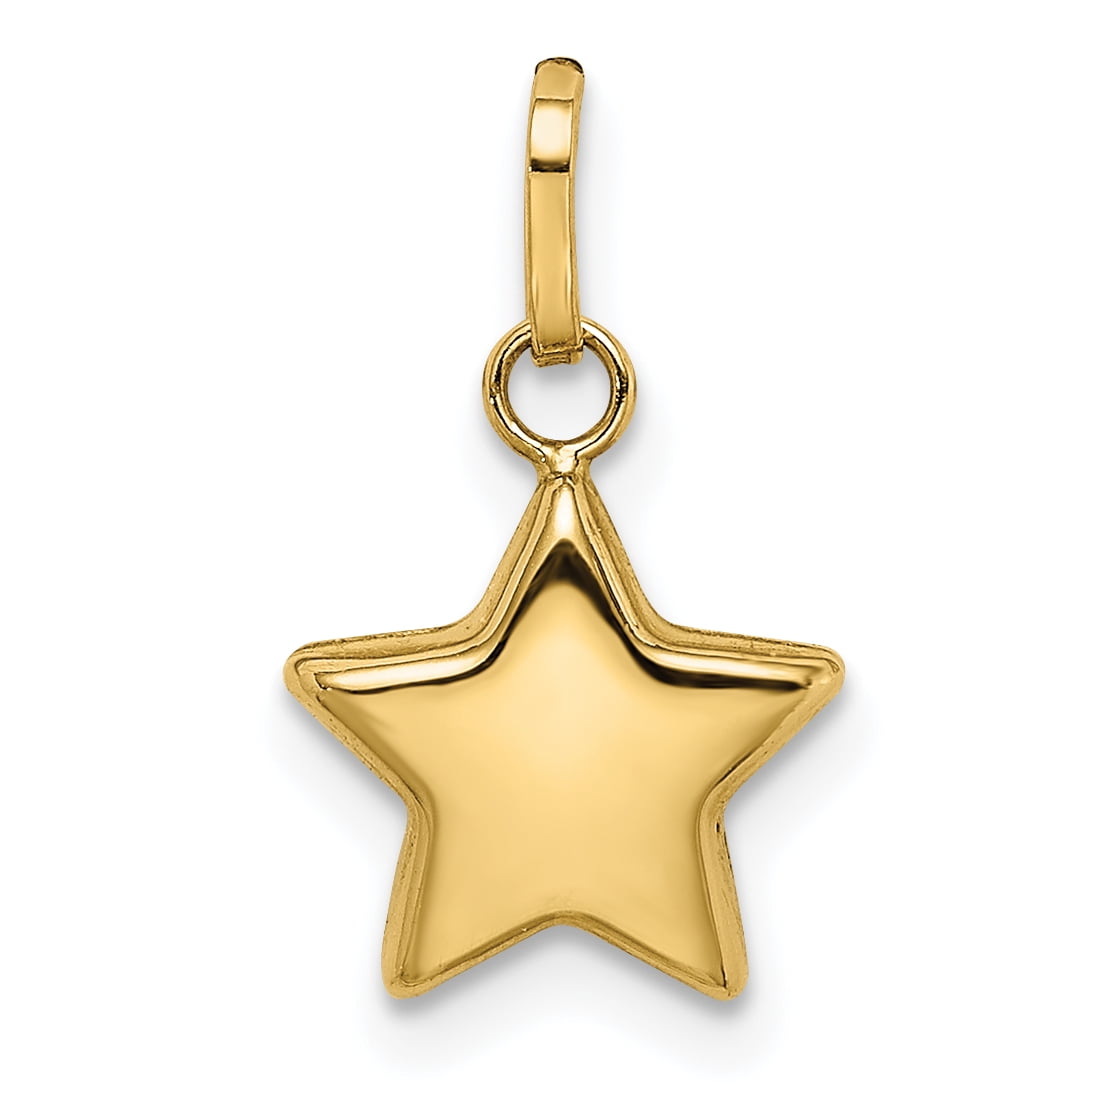 TGDJ 14k Yellow Gold Star Charm Pendant